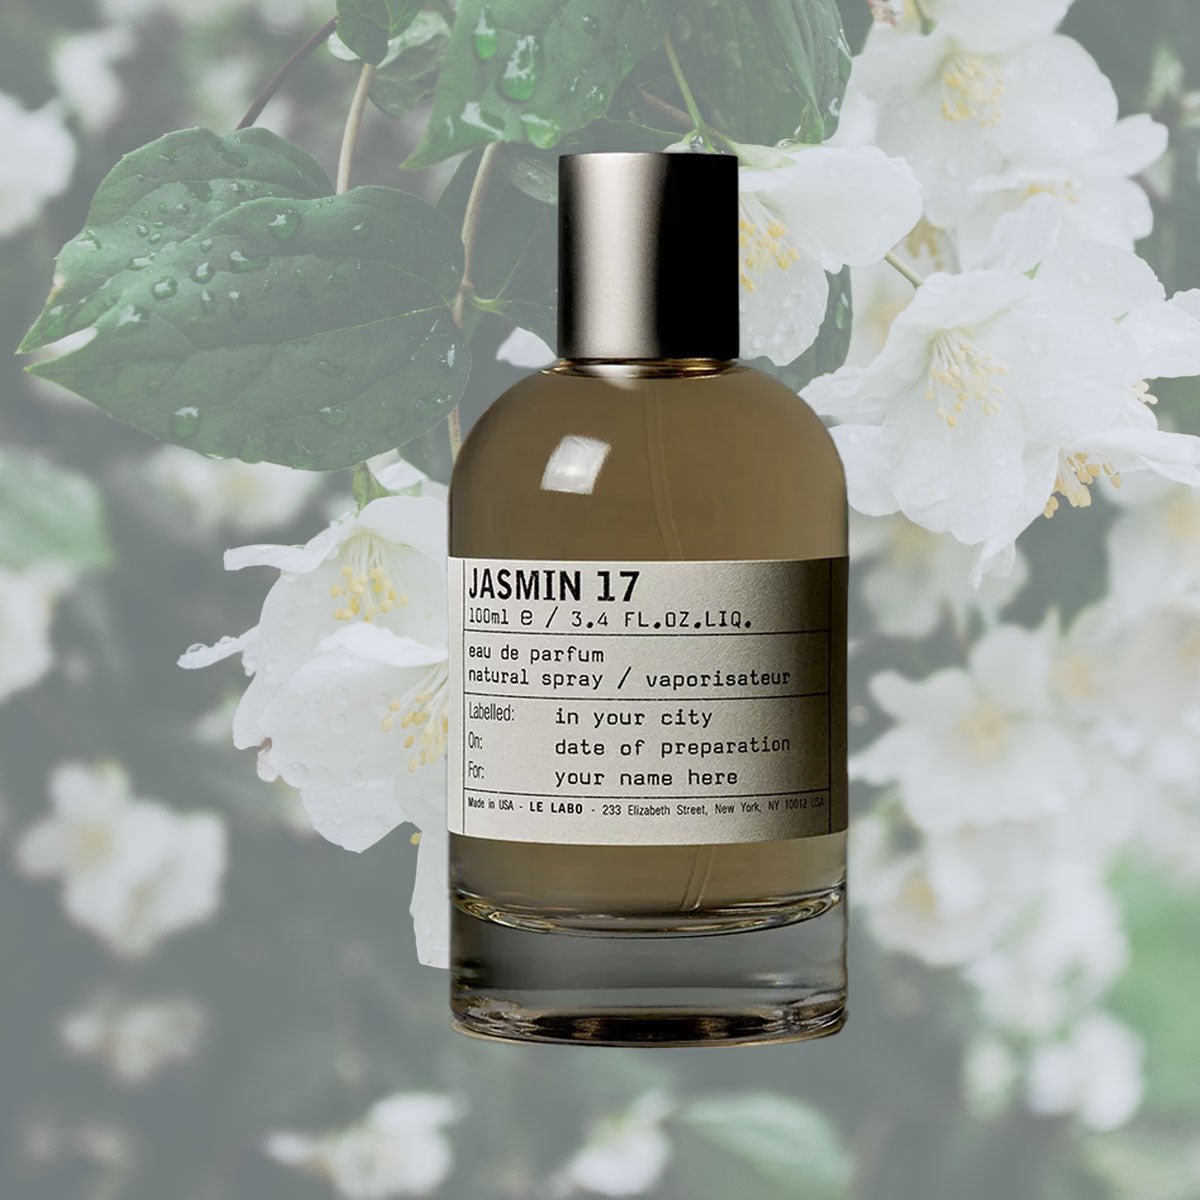 Le Labo Jasmin 17 EDP | My Perfume Shop Australia